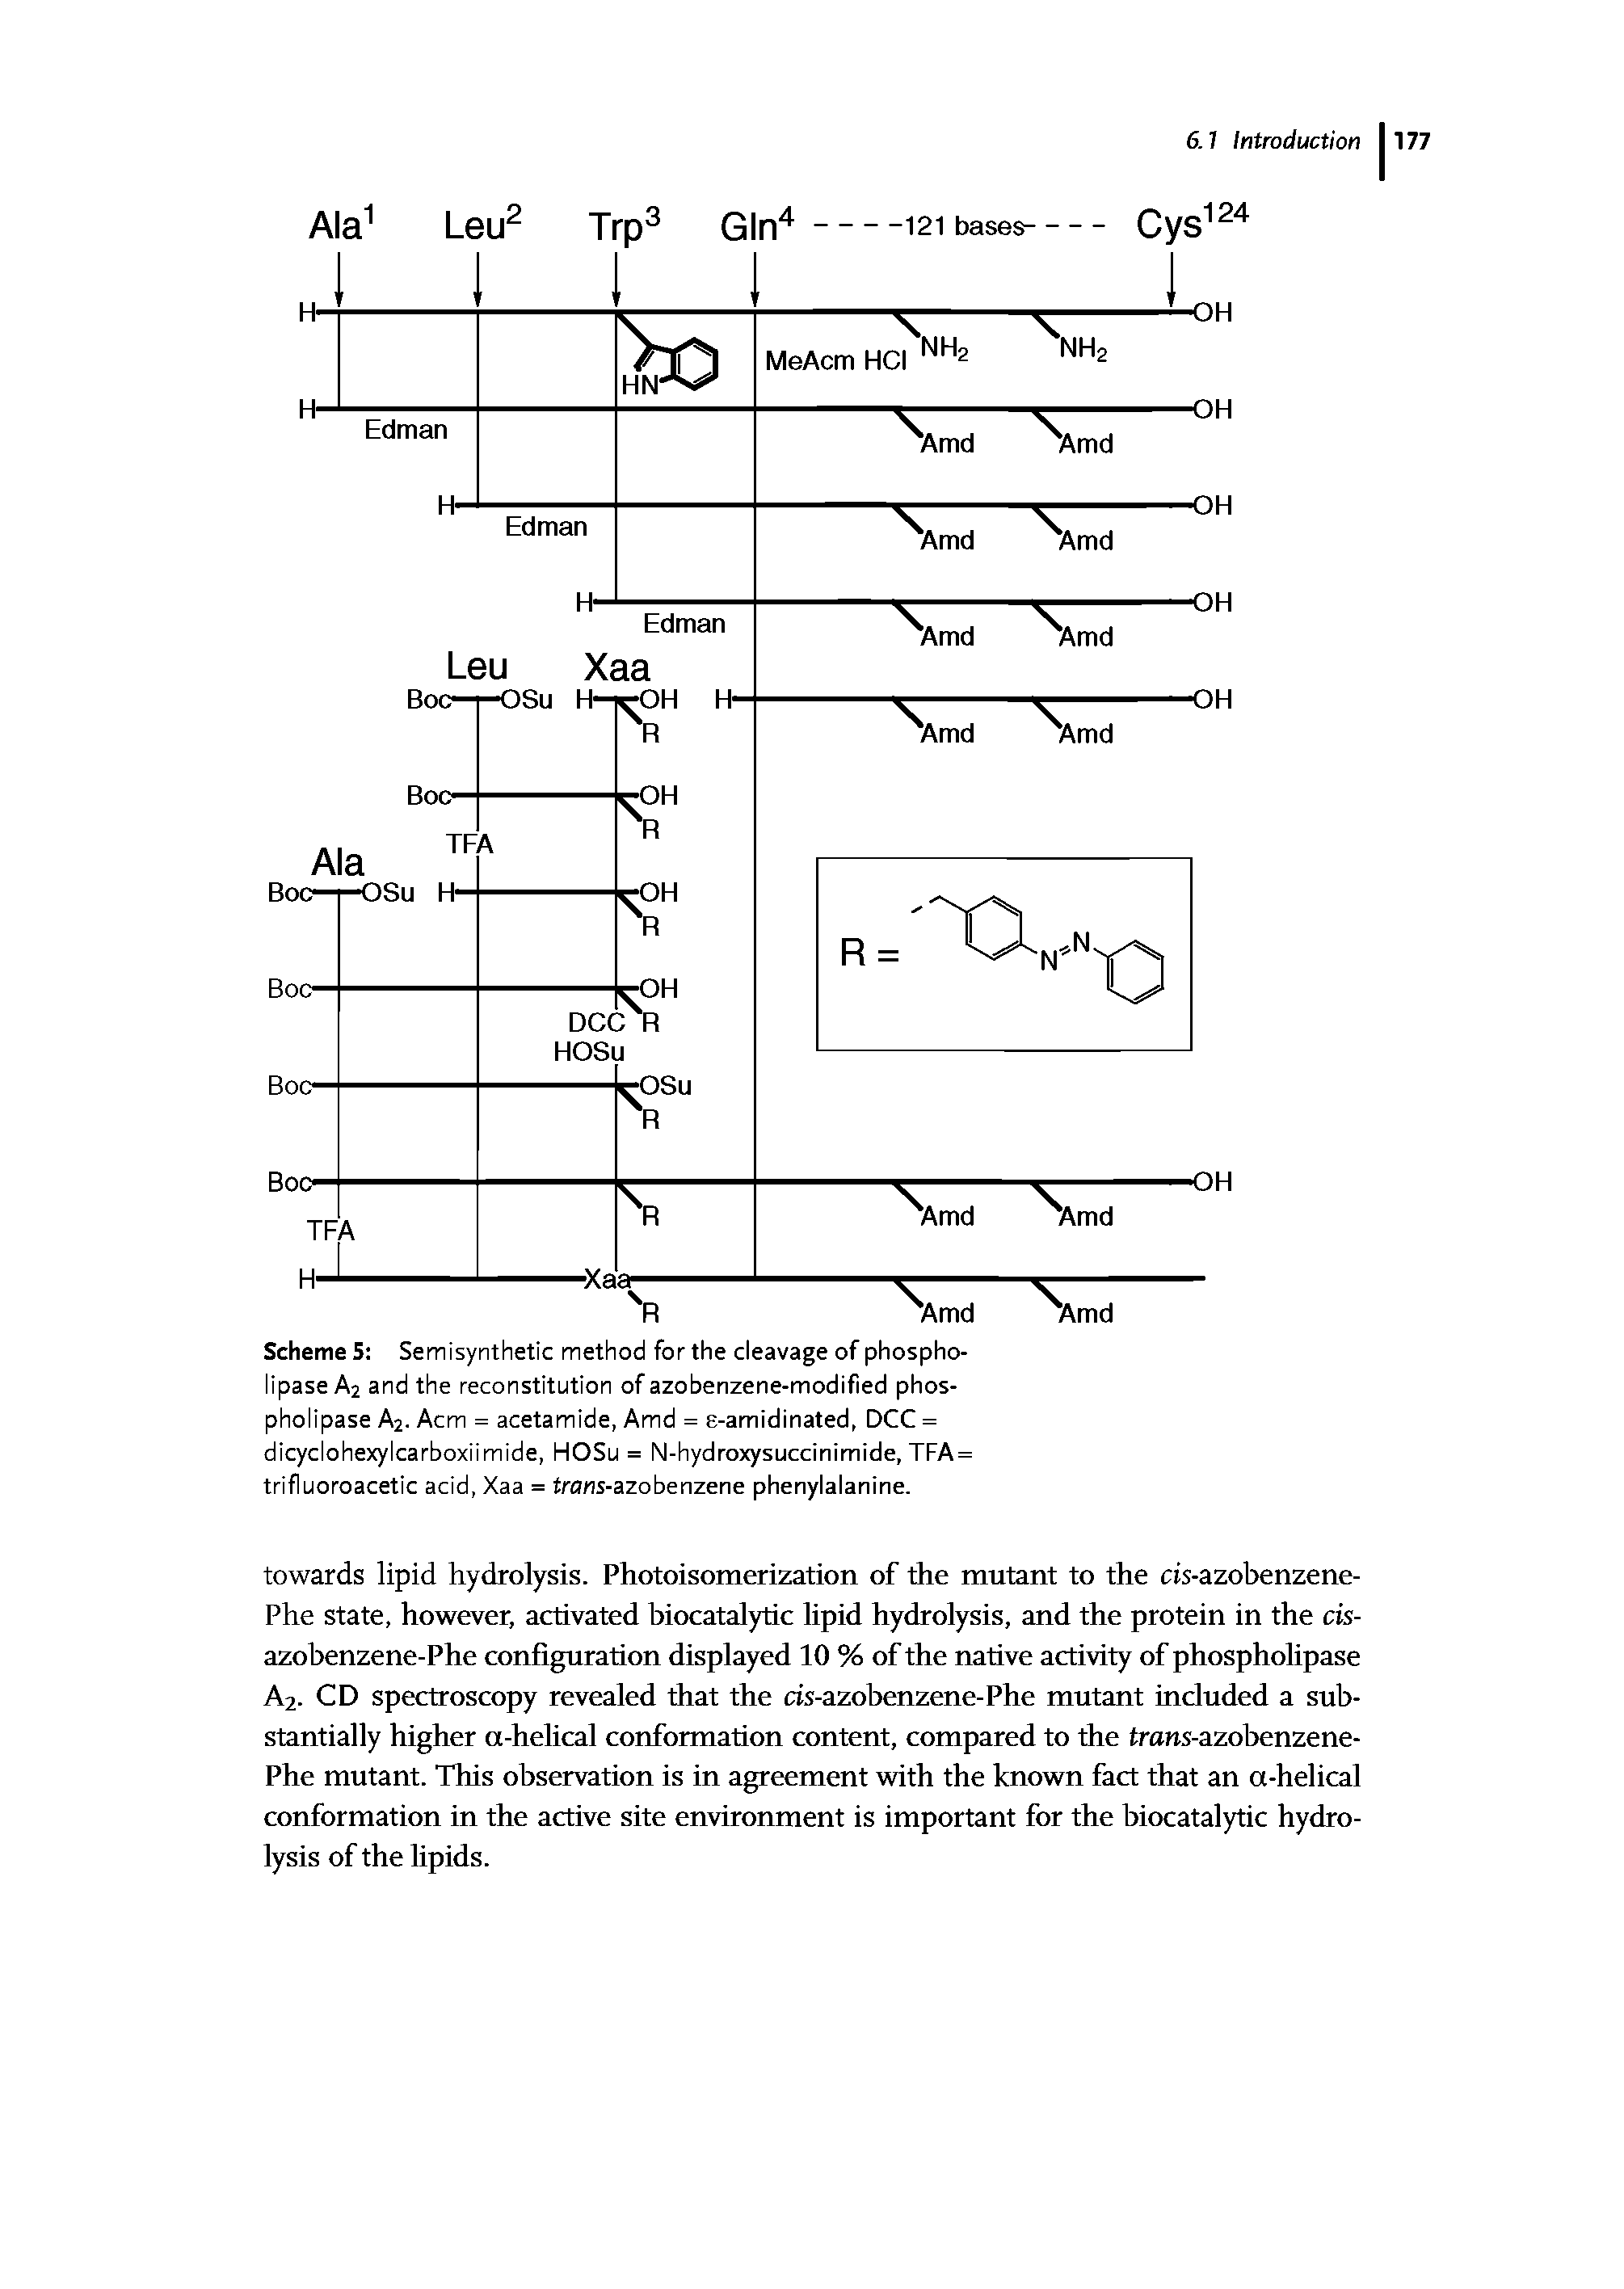 Scheme S Semisynthetic method for the cleavage of phospholipase A2 and the reconstitution of azobenzene-modified phospholipase A2. Acm = acetamide, Amd = s-amidinated, DCC = dicyclohexylcarboxiimide, HOSu = N-hydroxysuccinimide, TFA = trifluoroacetic acid, Xaa = trans-azobenzene phenylalanine.